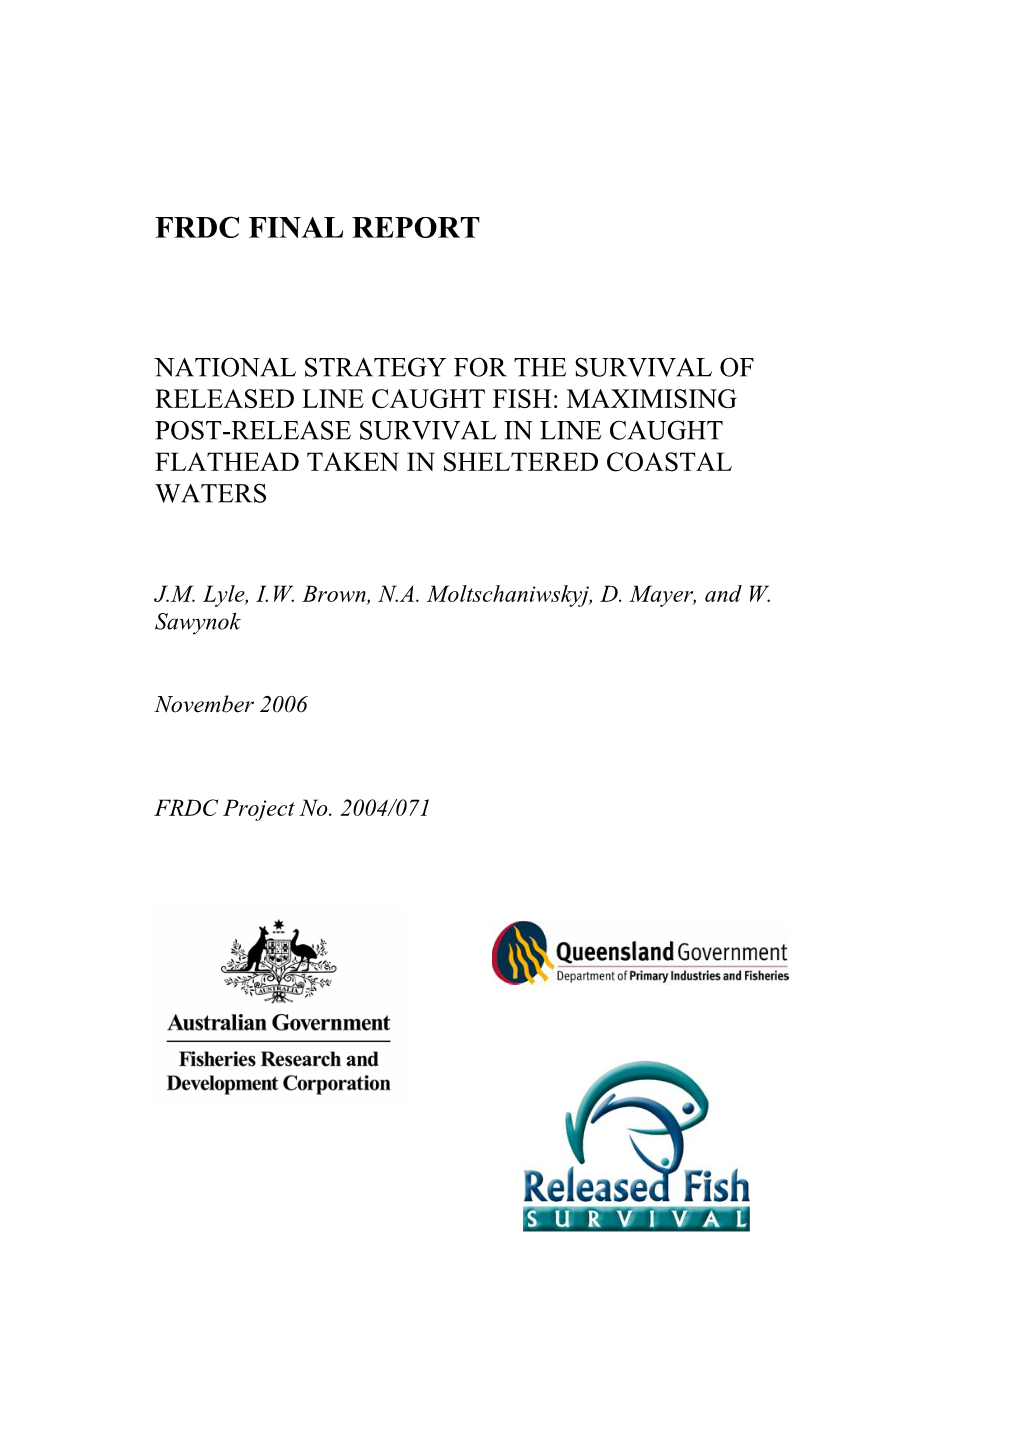 Draft Frdc Final Report